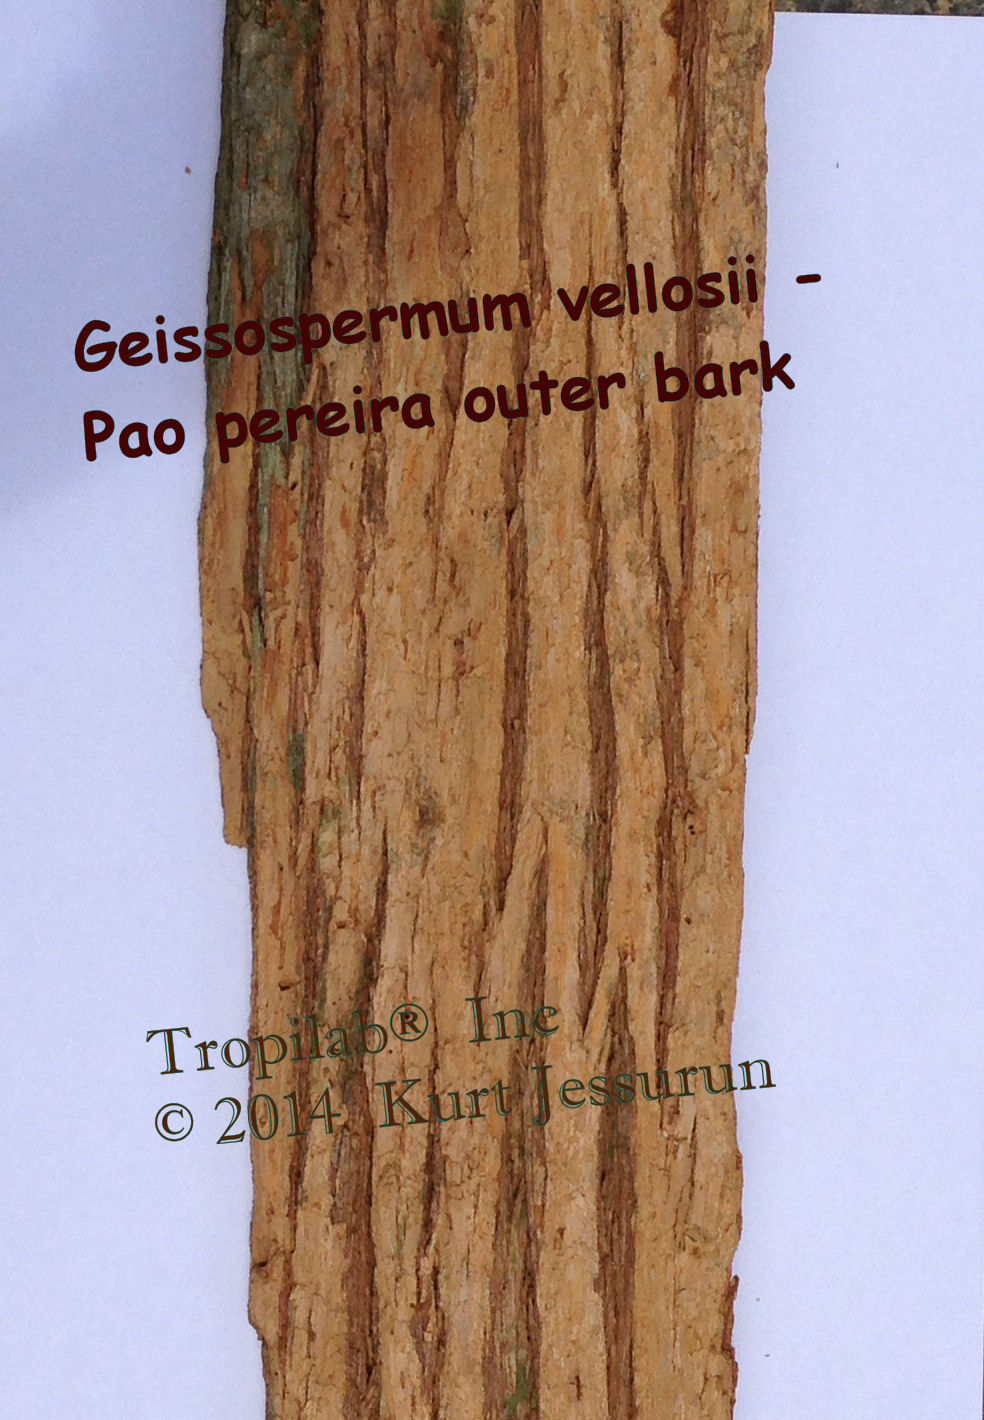 Geissospermum vellosii-Pao pereira outer bark - Tropilab Inc